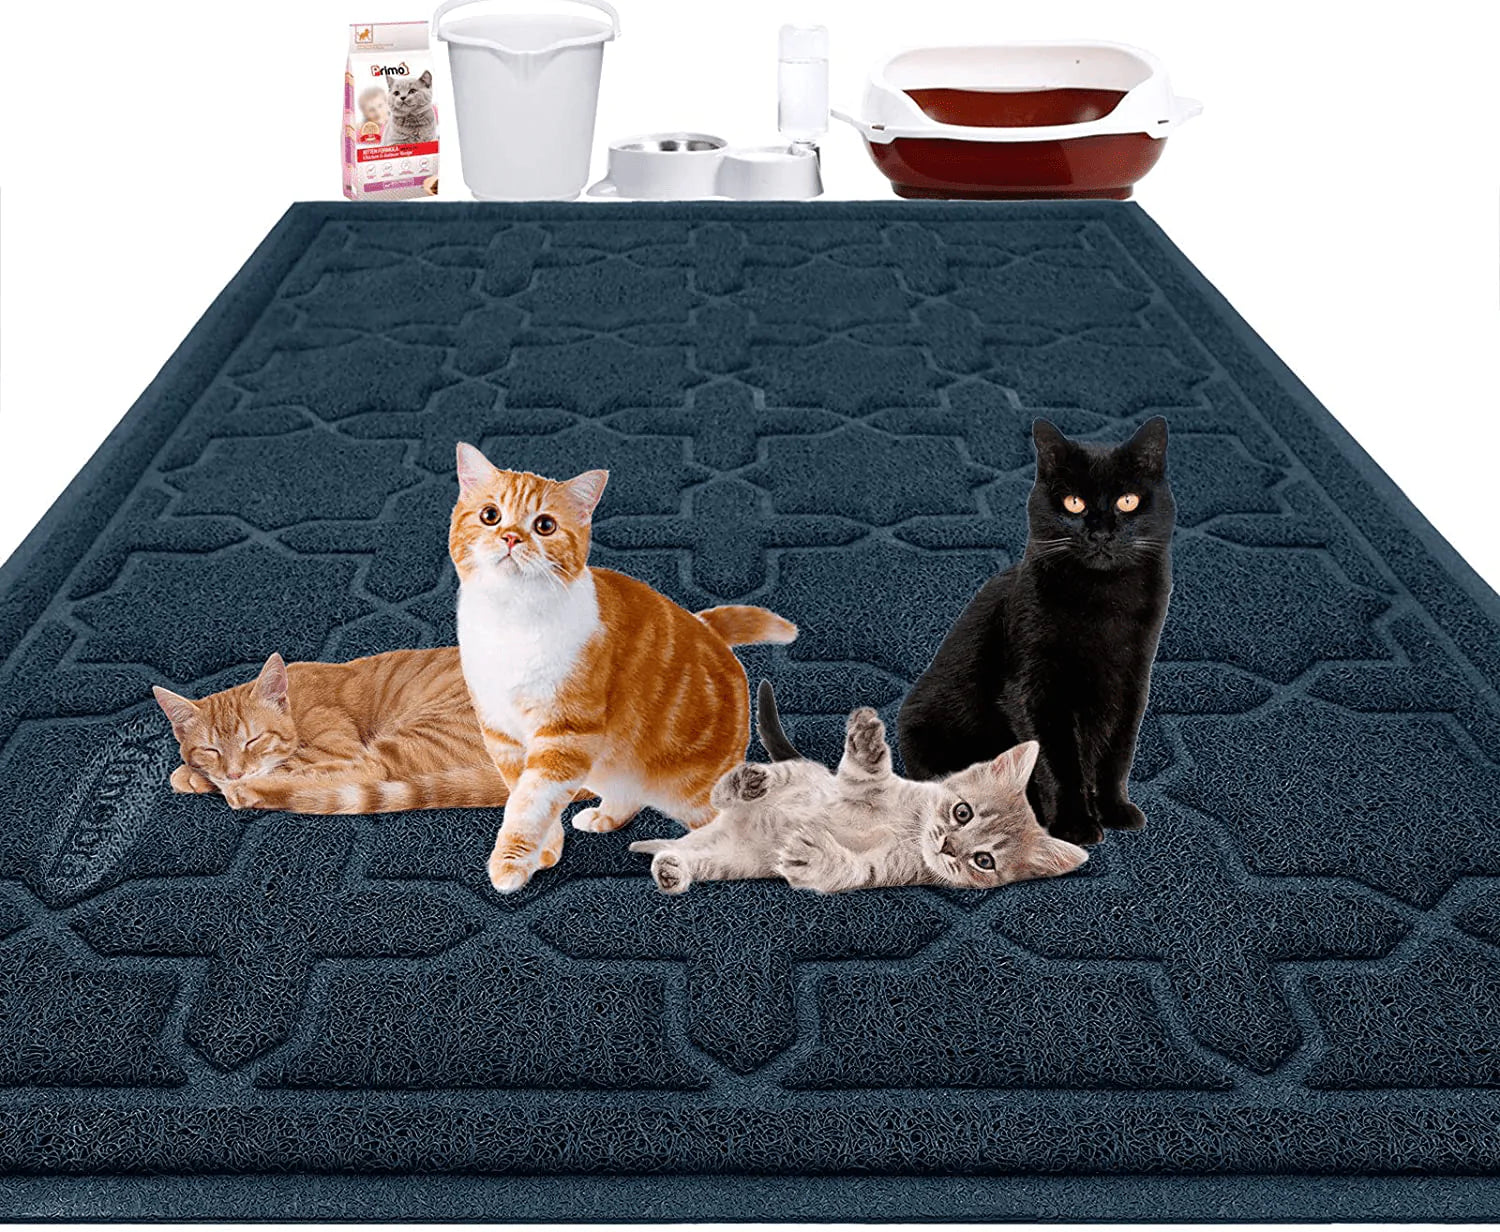 Yimobra Durable Premium Cat Litter Mat, XL Jumbo and Extra Large Cat B –  KOL PET